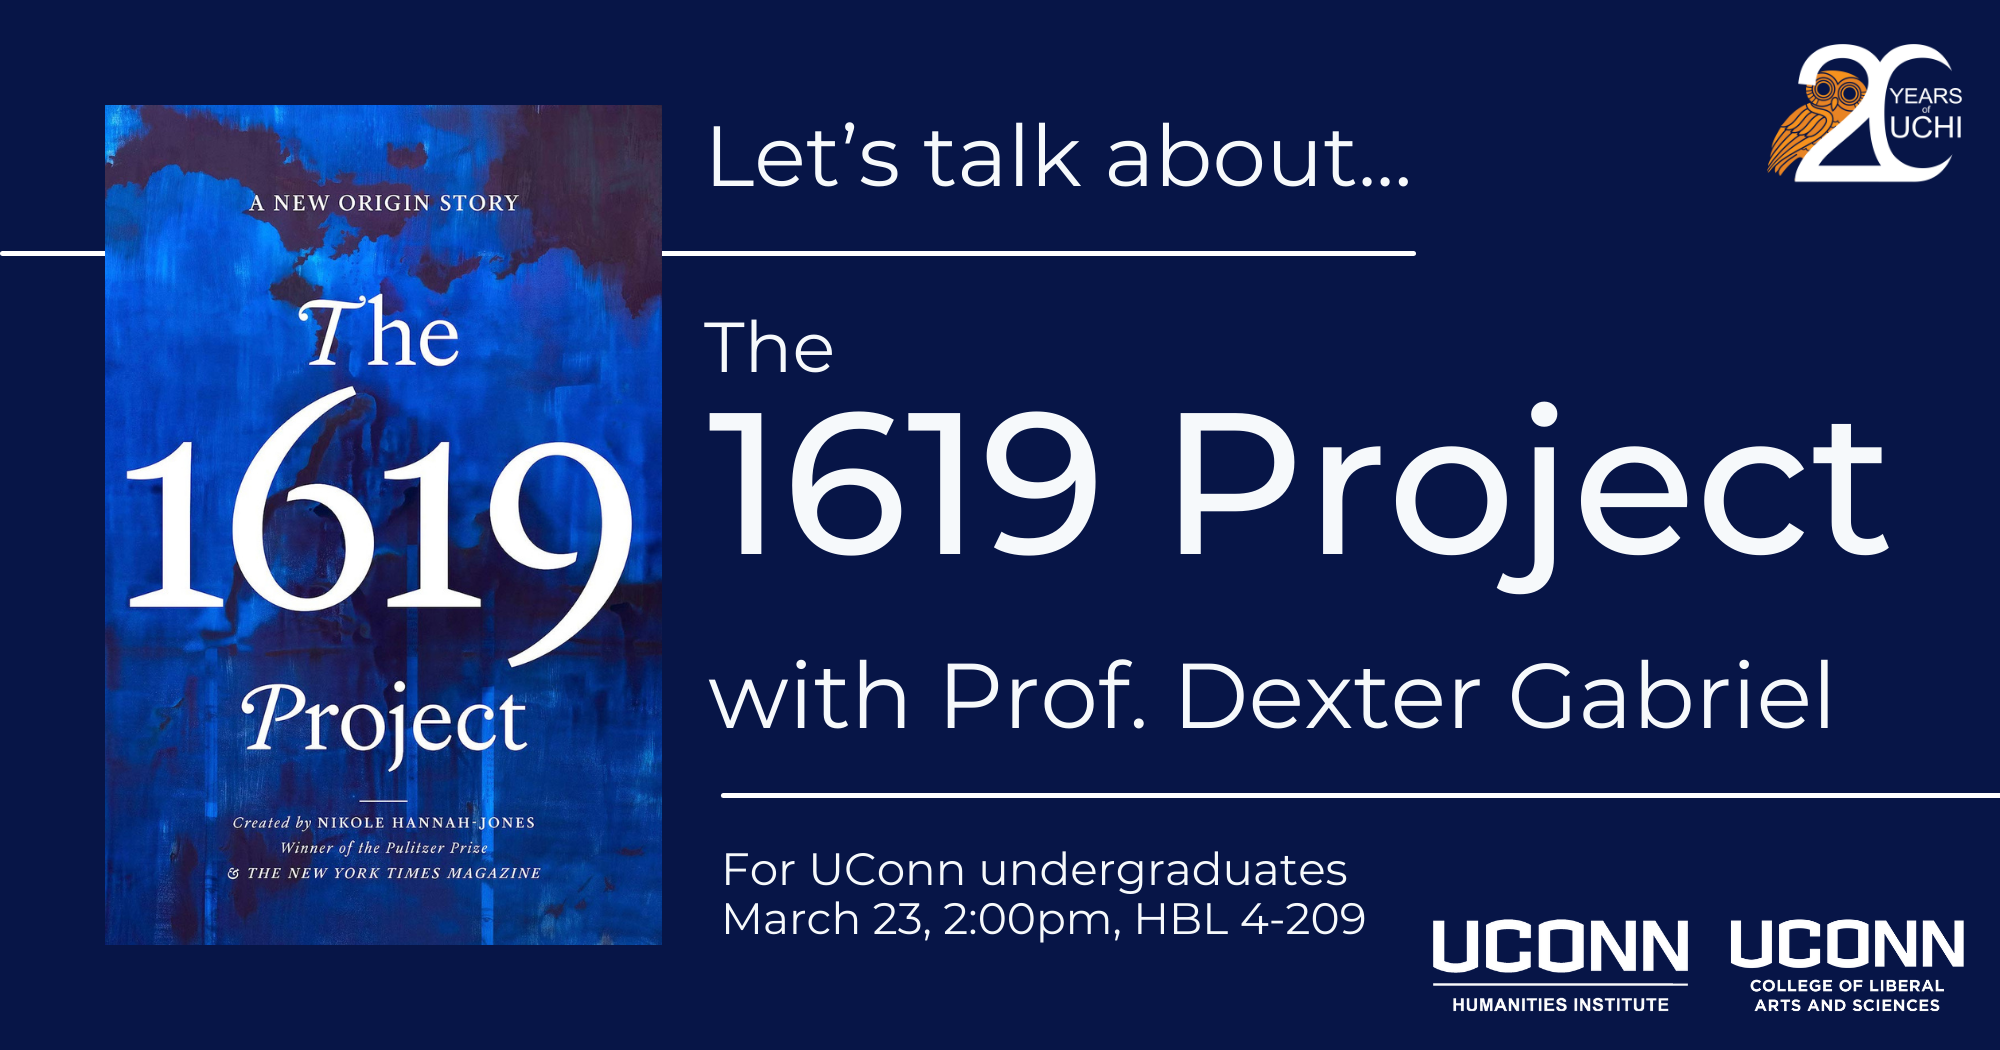 Let's talk about the 1619 project with Prof Dexter Gabriel. For UConn undergraduates, March 23, 2022, 2:00pm, HBL 4-209.